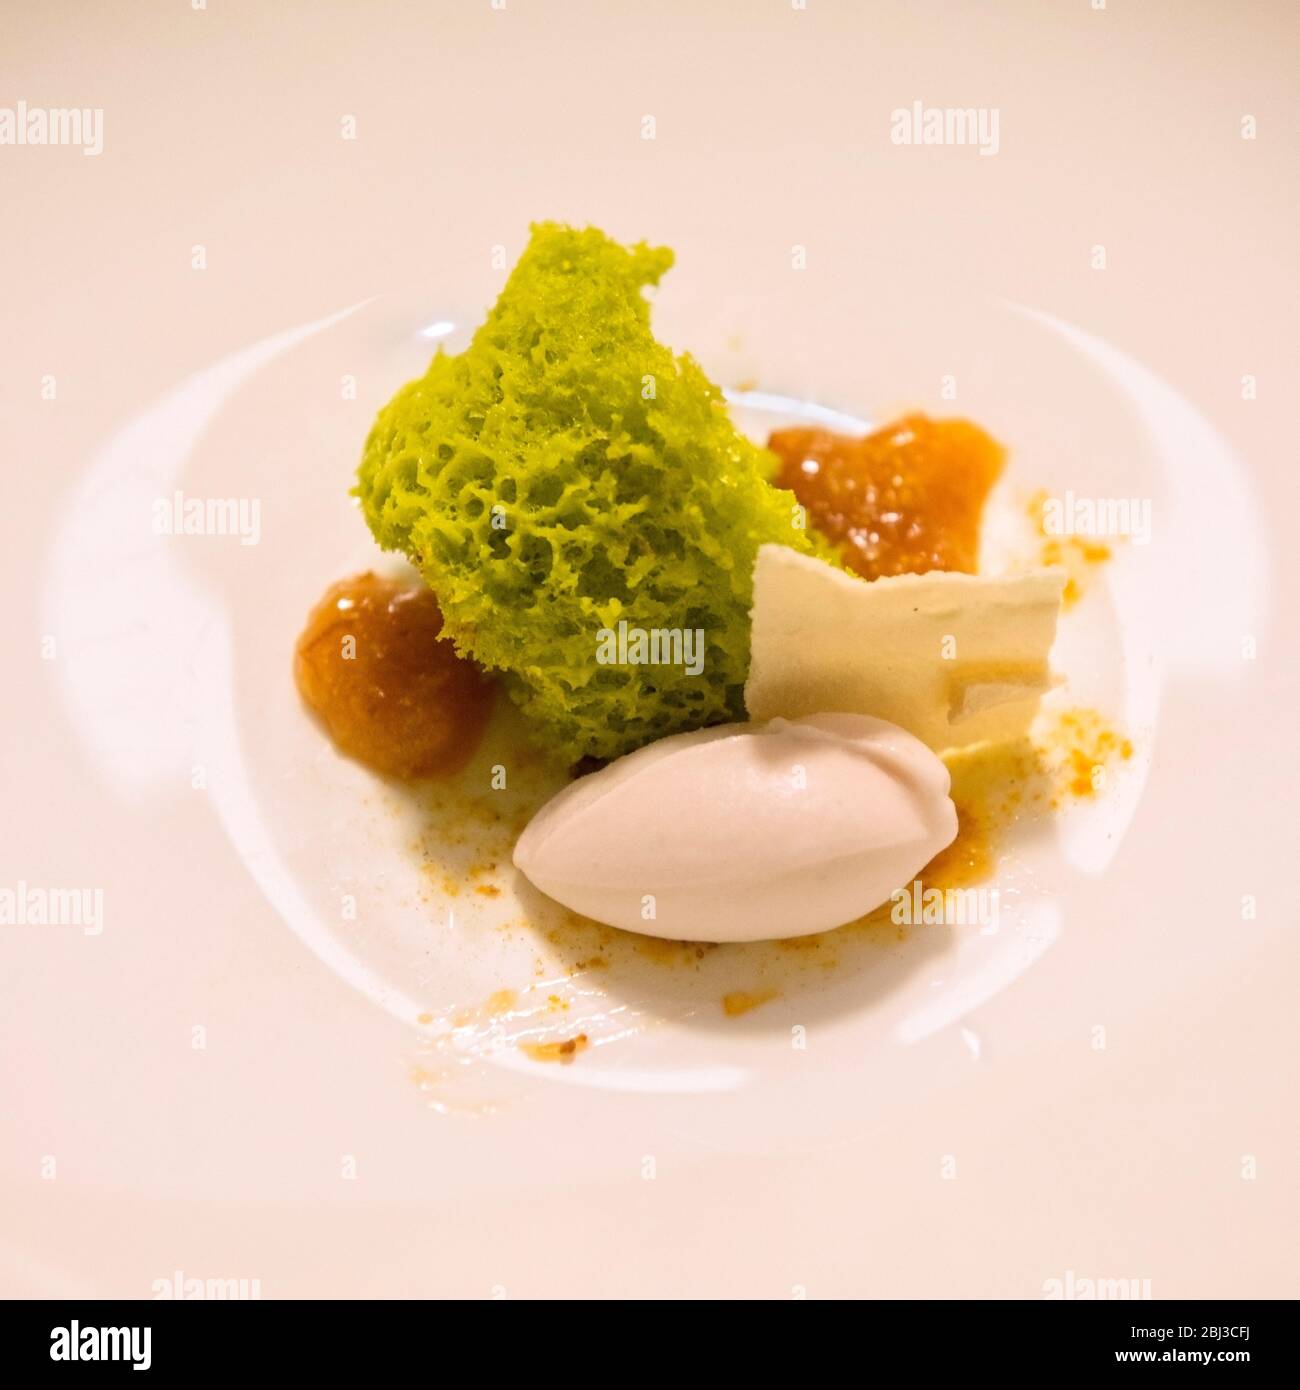 A Gourmet Dish of L'Erba del Re Restaurant, One Star Michelin Guide, Modena, Emilia Romagna, Italy, Europe Stock Photo